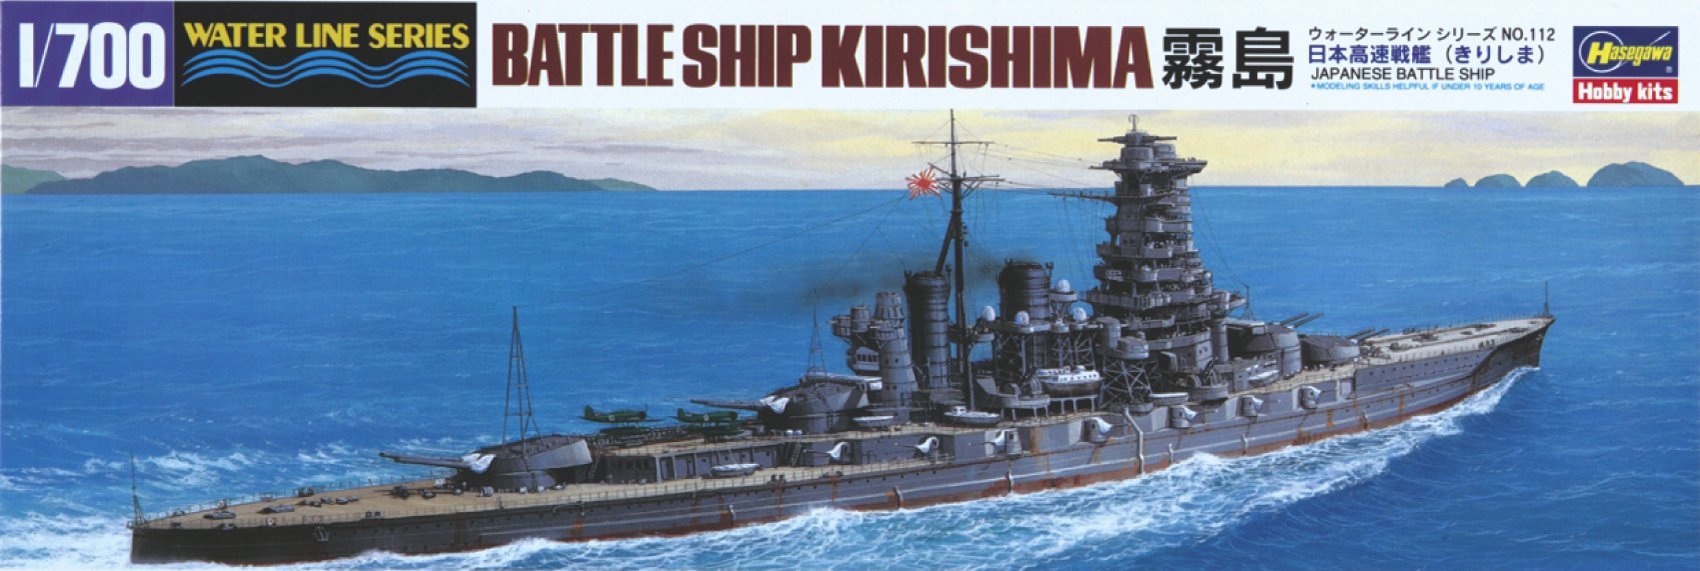 Hasegawa 1/700 Water Line Series Japanese Navy Japanese High Speed Battleship Kirishima Plastic Model 112